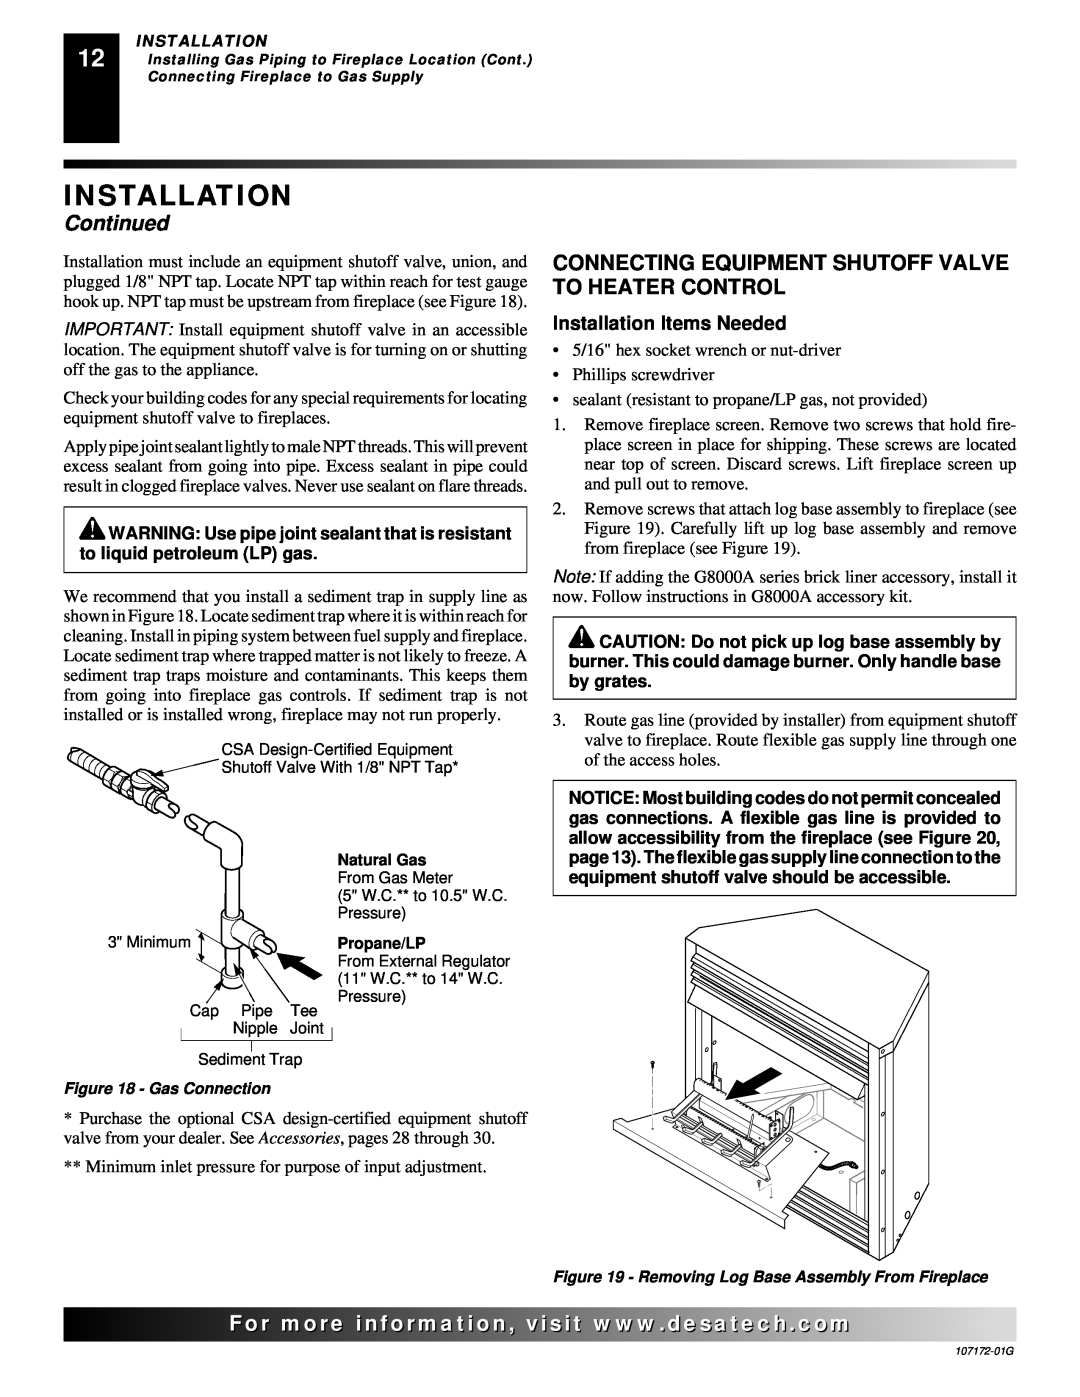 Desa VSGF33PRA installation manual Continued, Installation Items Needed, •5/16 hex socket wrench or nut-driver 